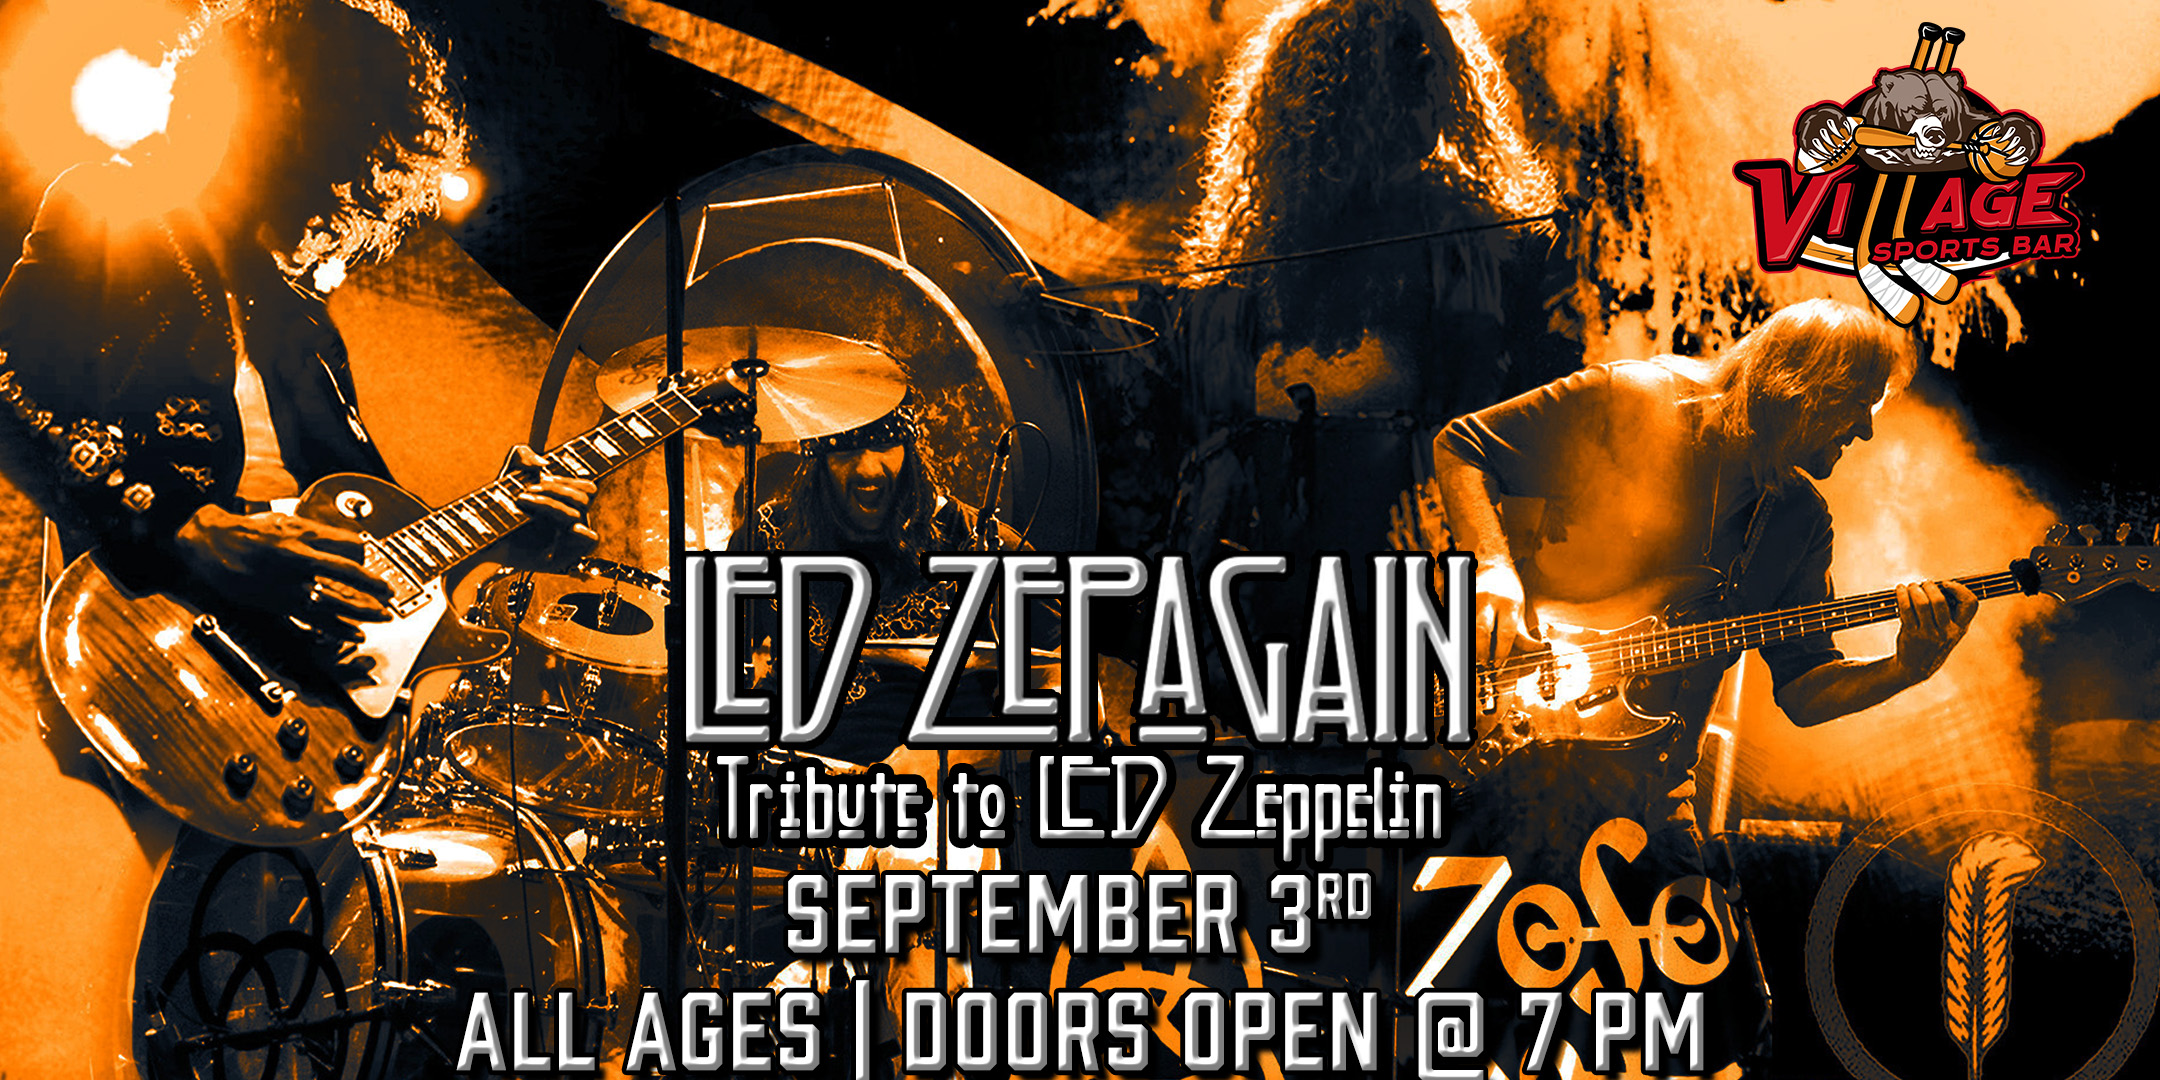 Village Sports Bar Presents: Led Zepagain: Tribute to Led Zeppelin